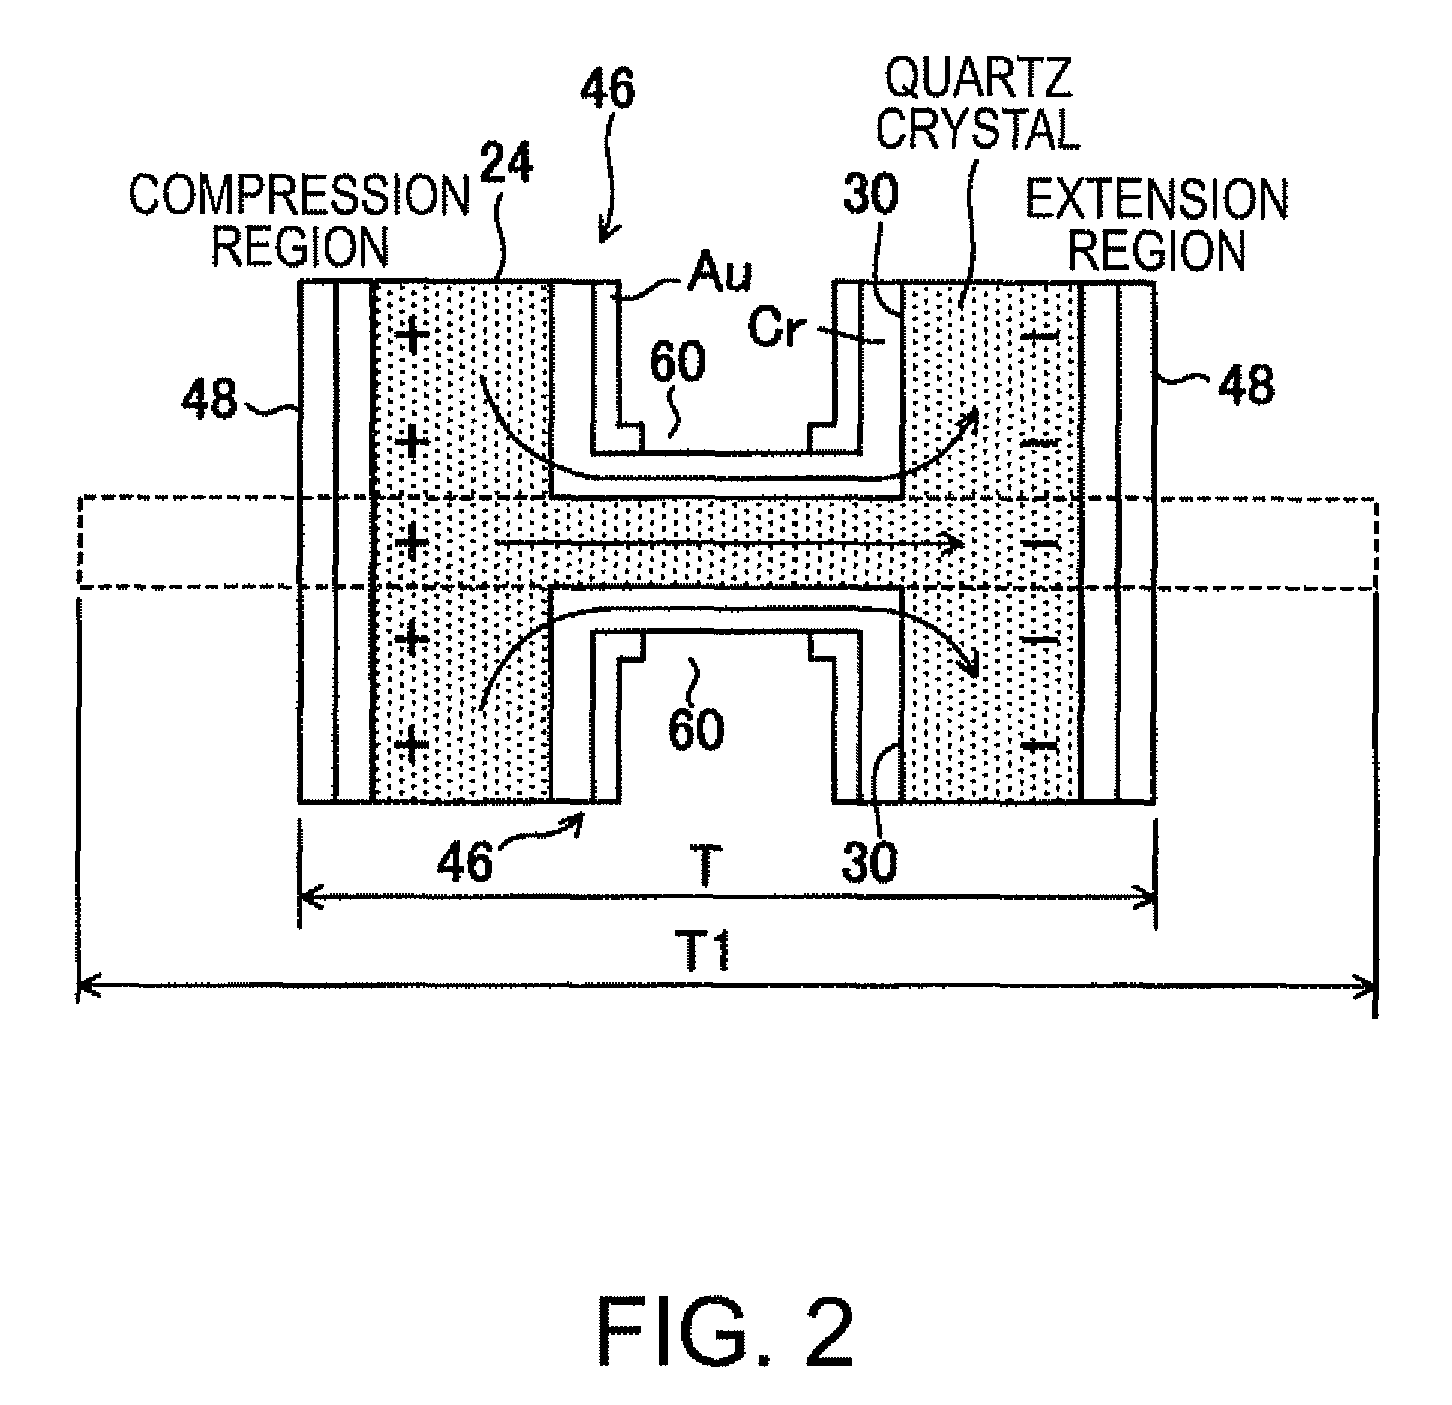 Resonator, conductive film layer and oscillator